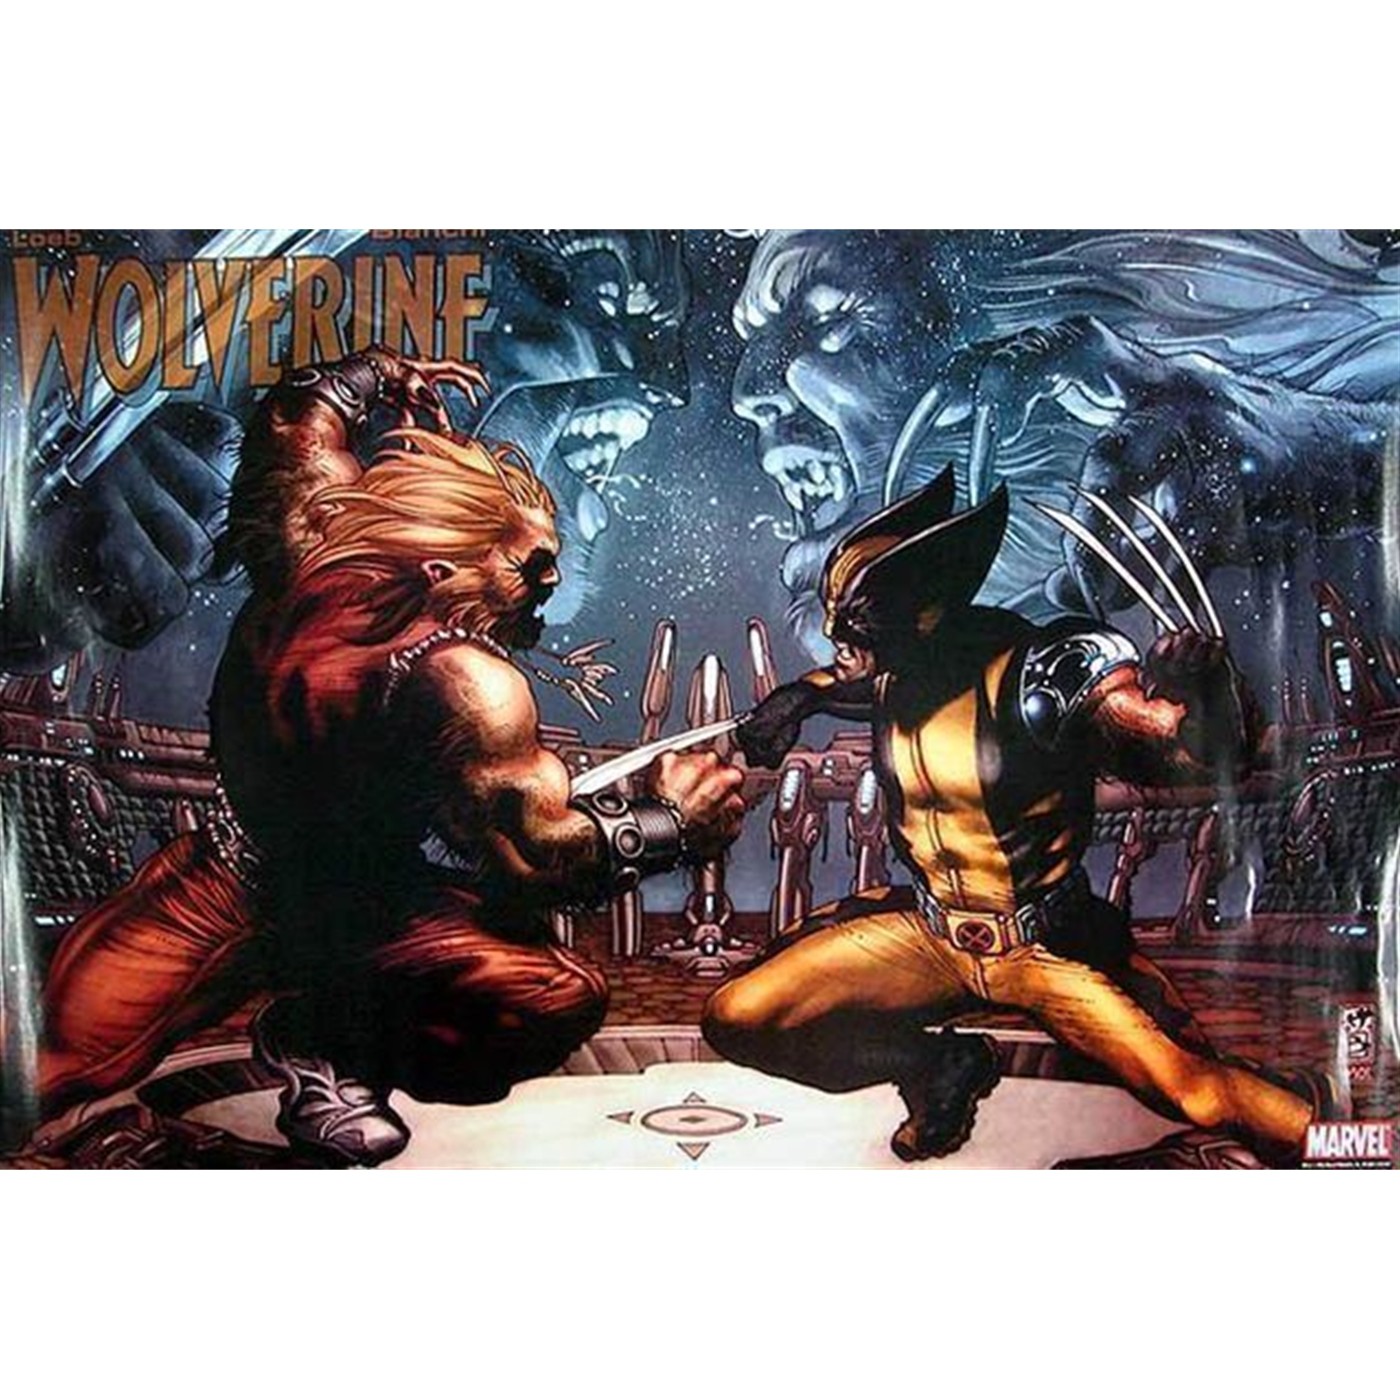 Wolverine #50 Poster